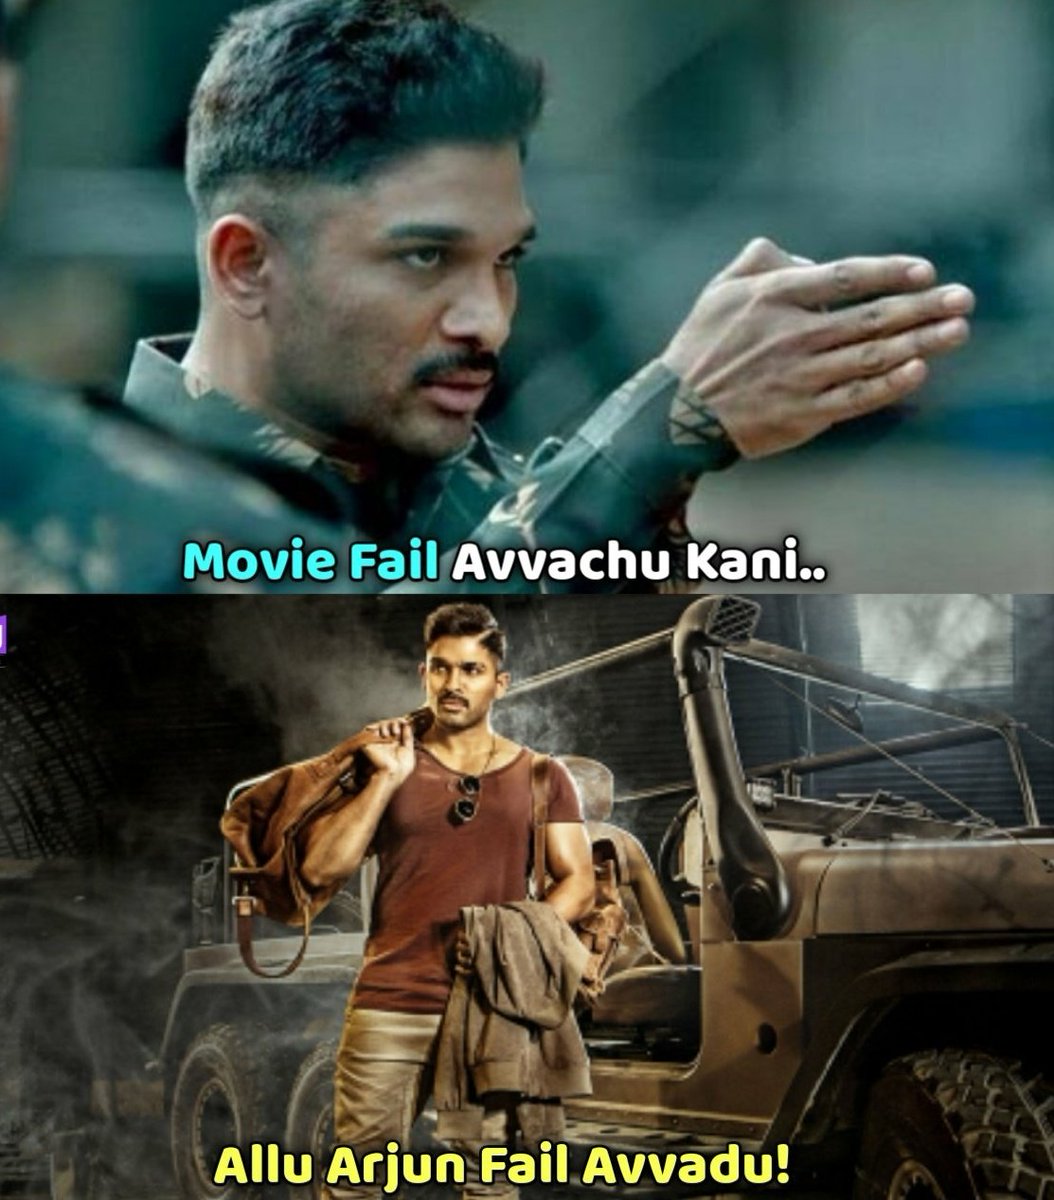 Movie fail avvachu kaani maavodu kaadu 
#NaaPeruSuryaNaaIlluIndia ❤️🎥

#5YearsforNSNI #5YearsForNaaPeruSurya
@alluarjun